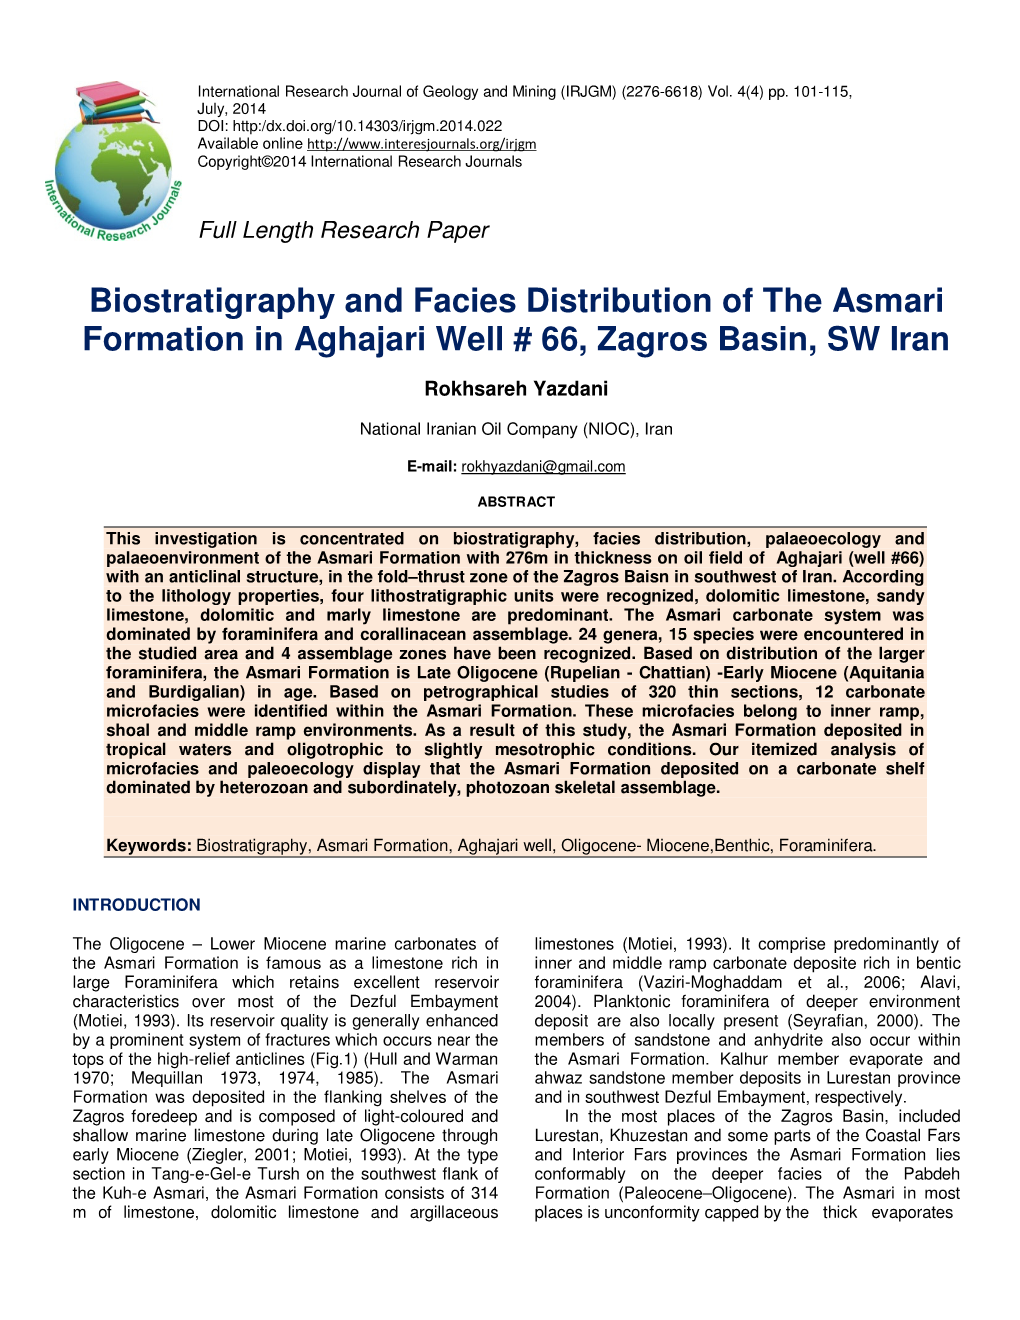 Biostratigraphy and Facies Distribution of the Asmari Formation in Aghajari Well # 66, Zagros Basin, SW Iran